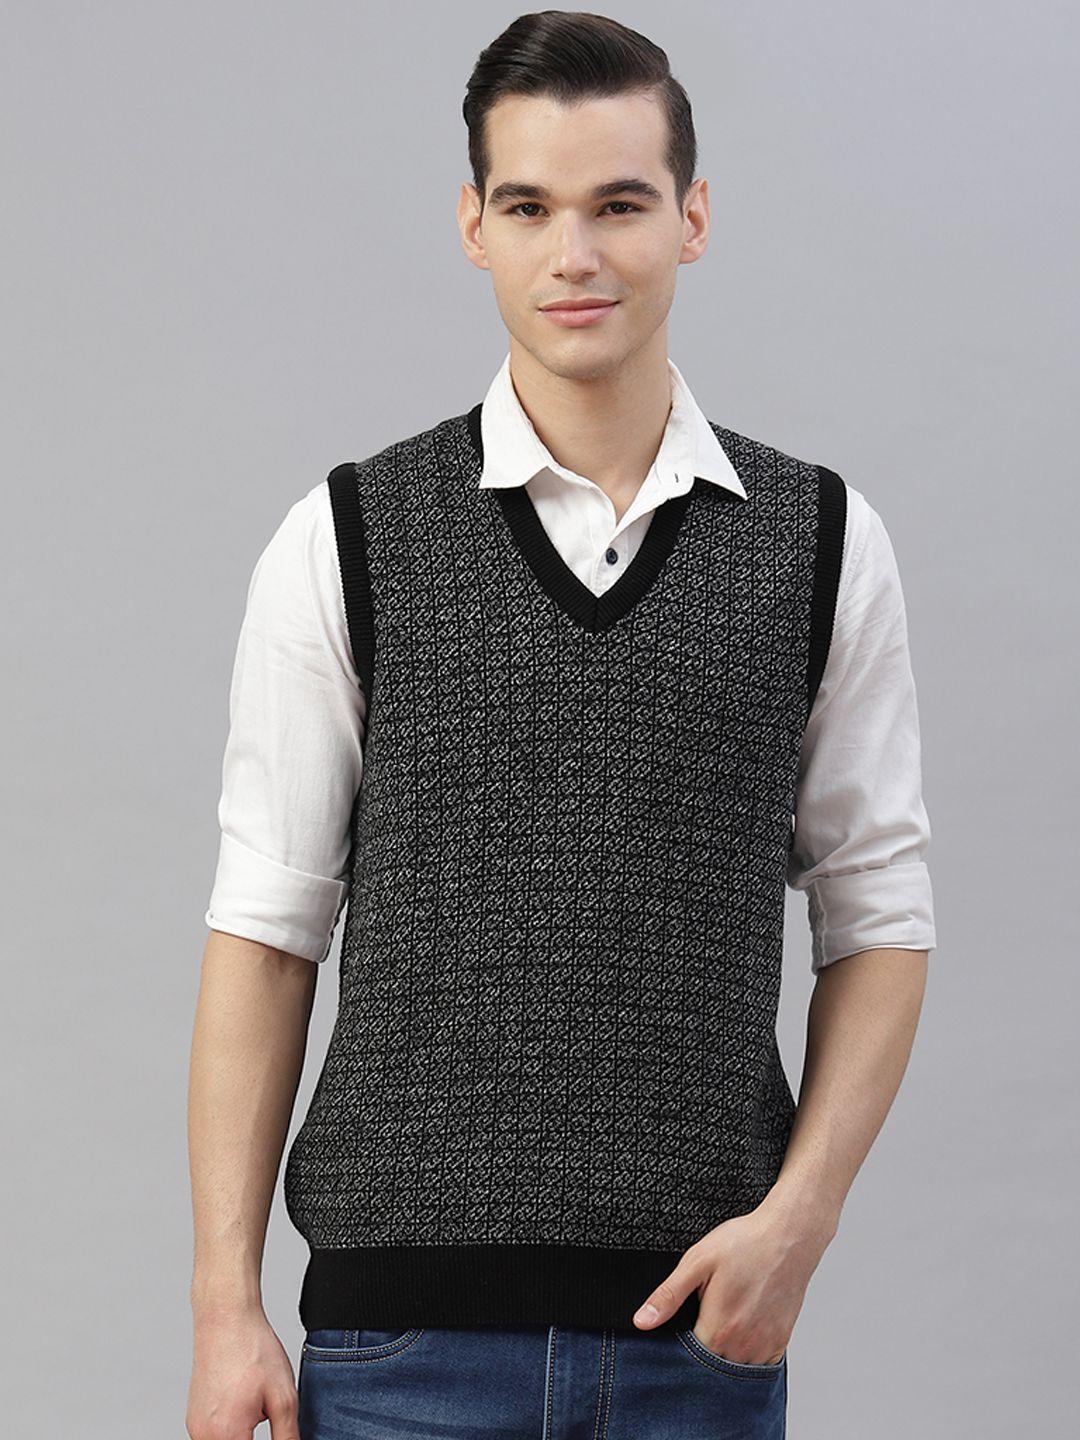 pierre carlo men black & white sweater vest